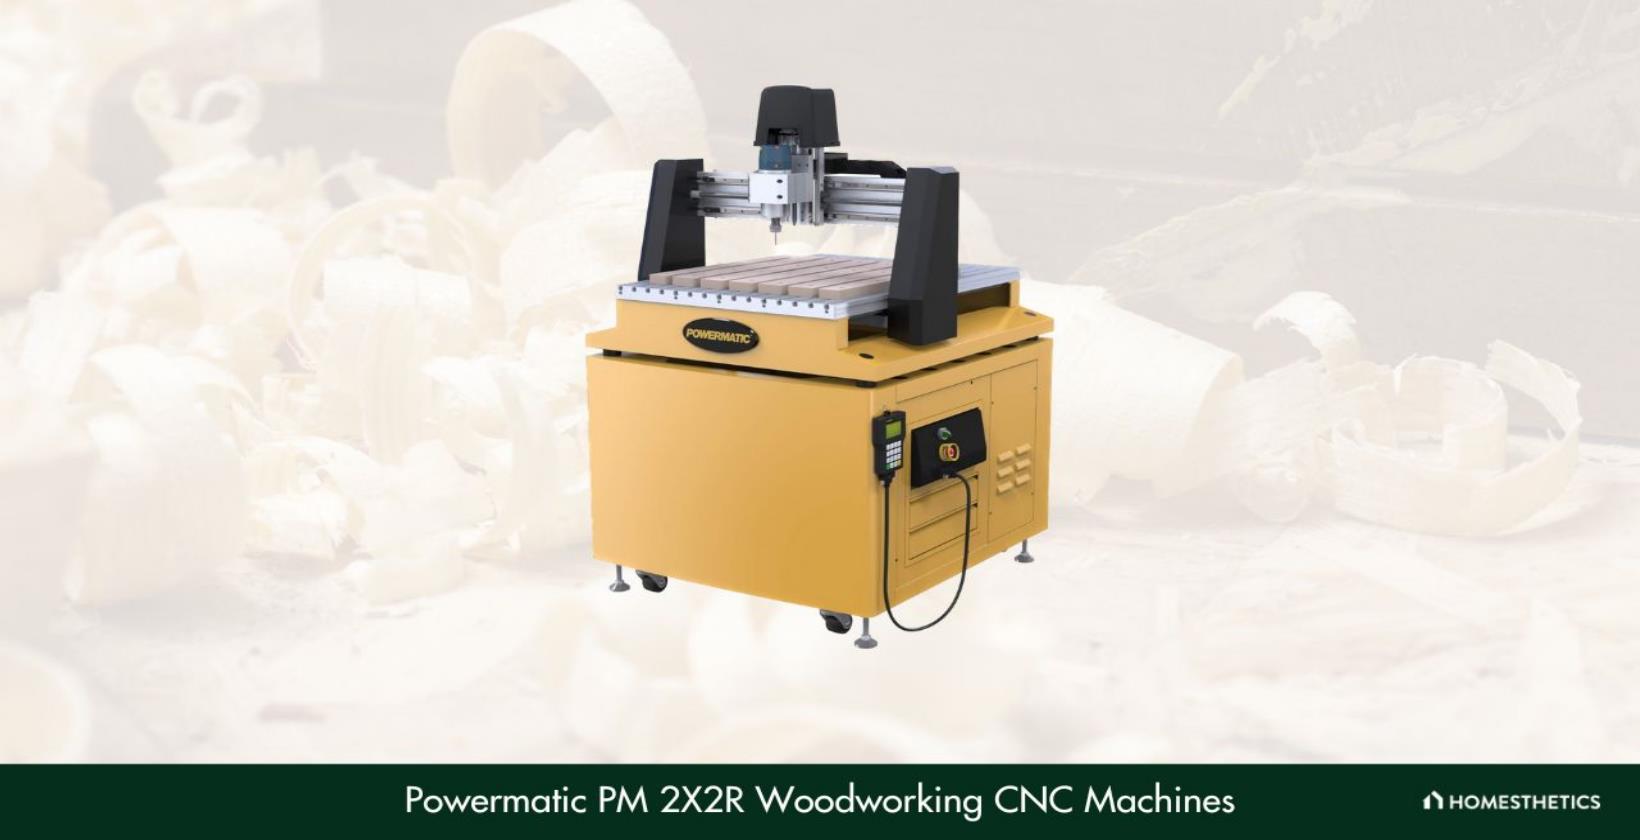 9. Powermatic PM 2X2R Woodworking CNC Machines